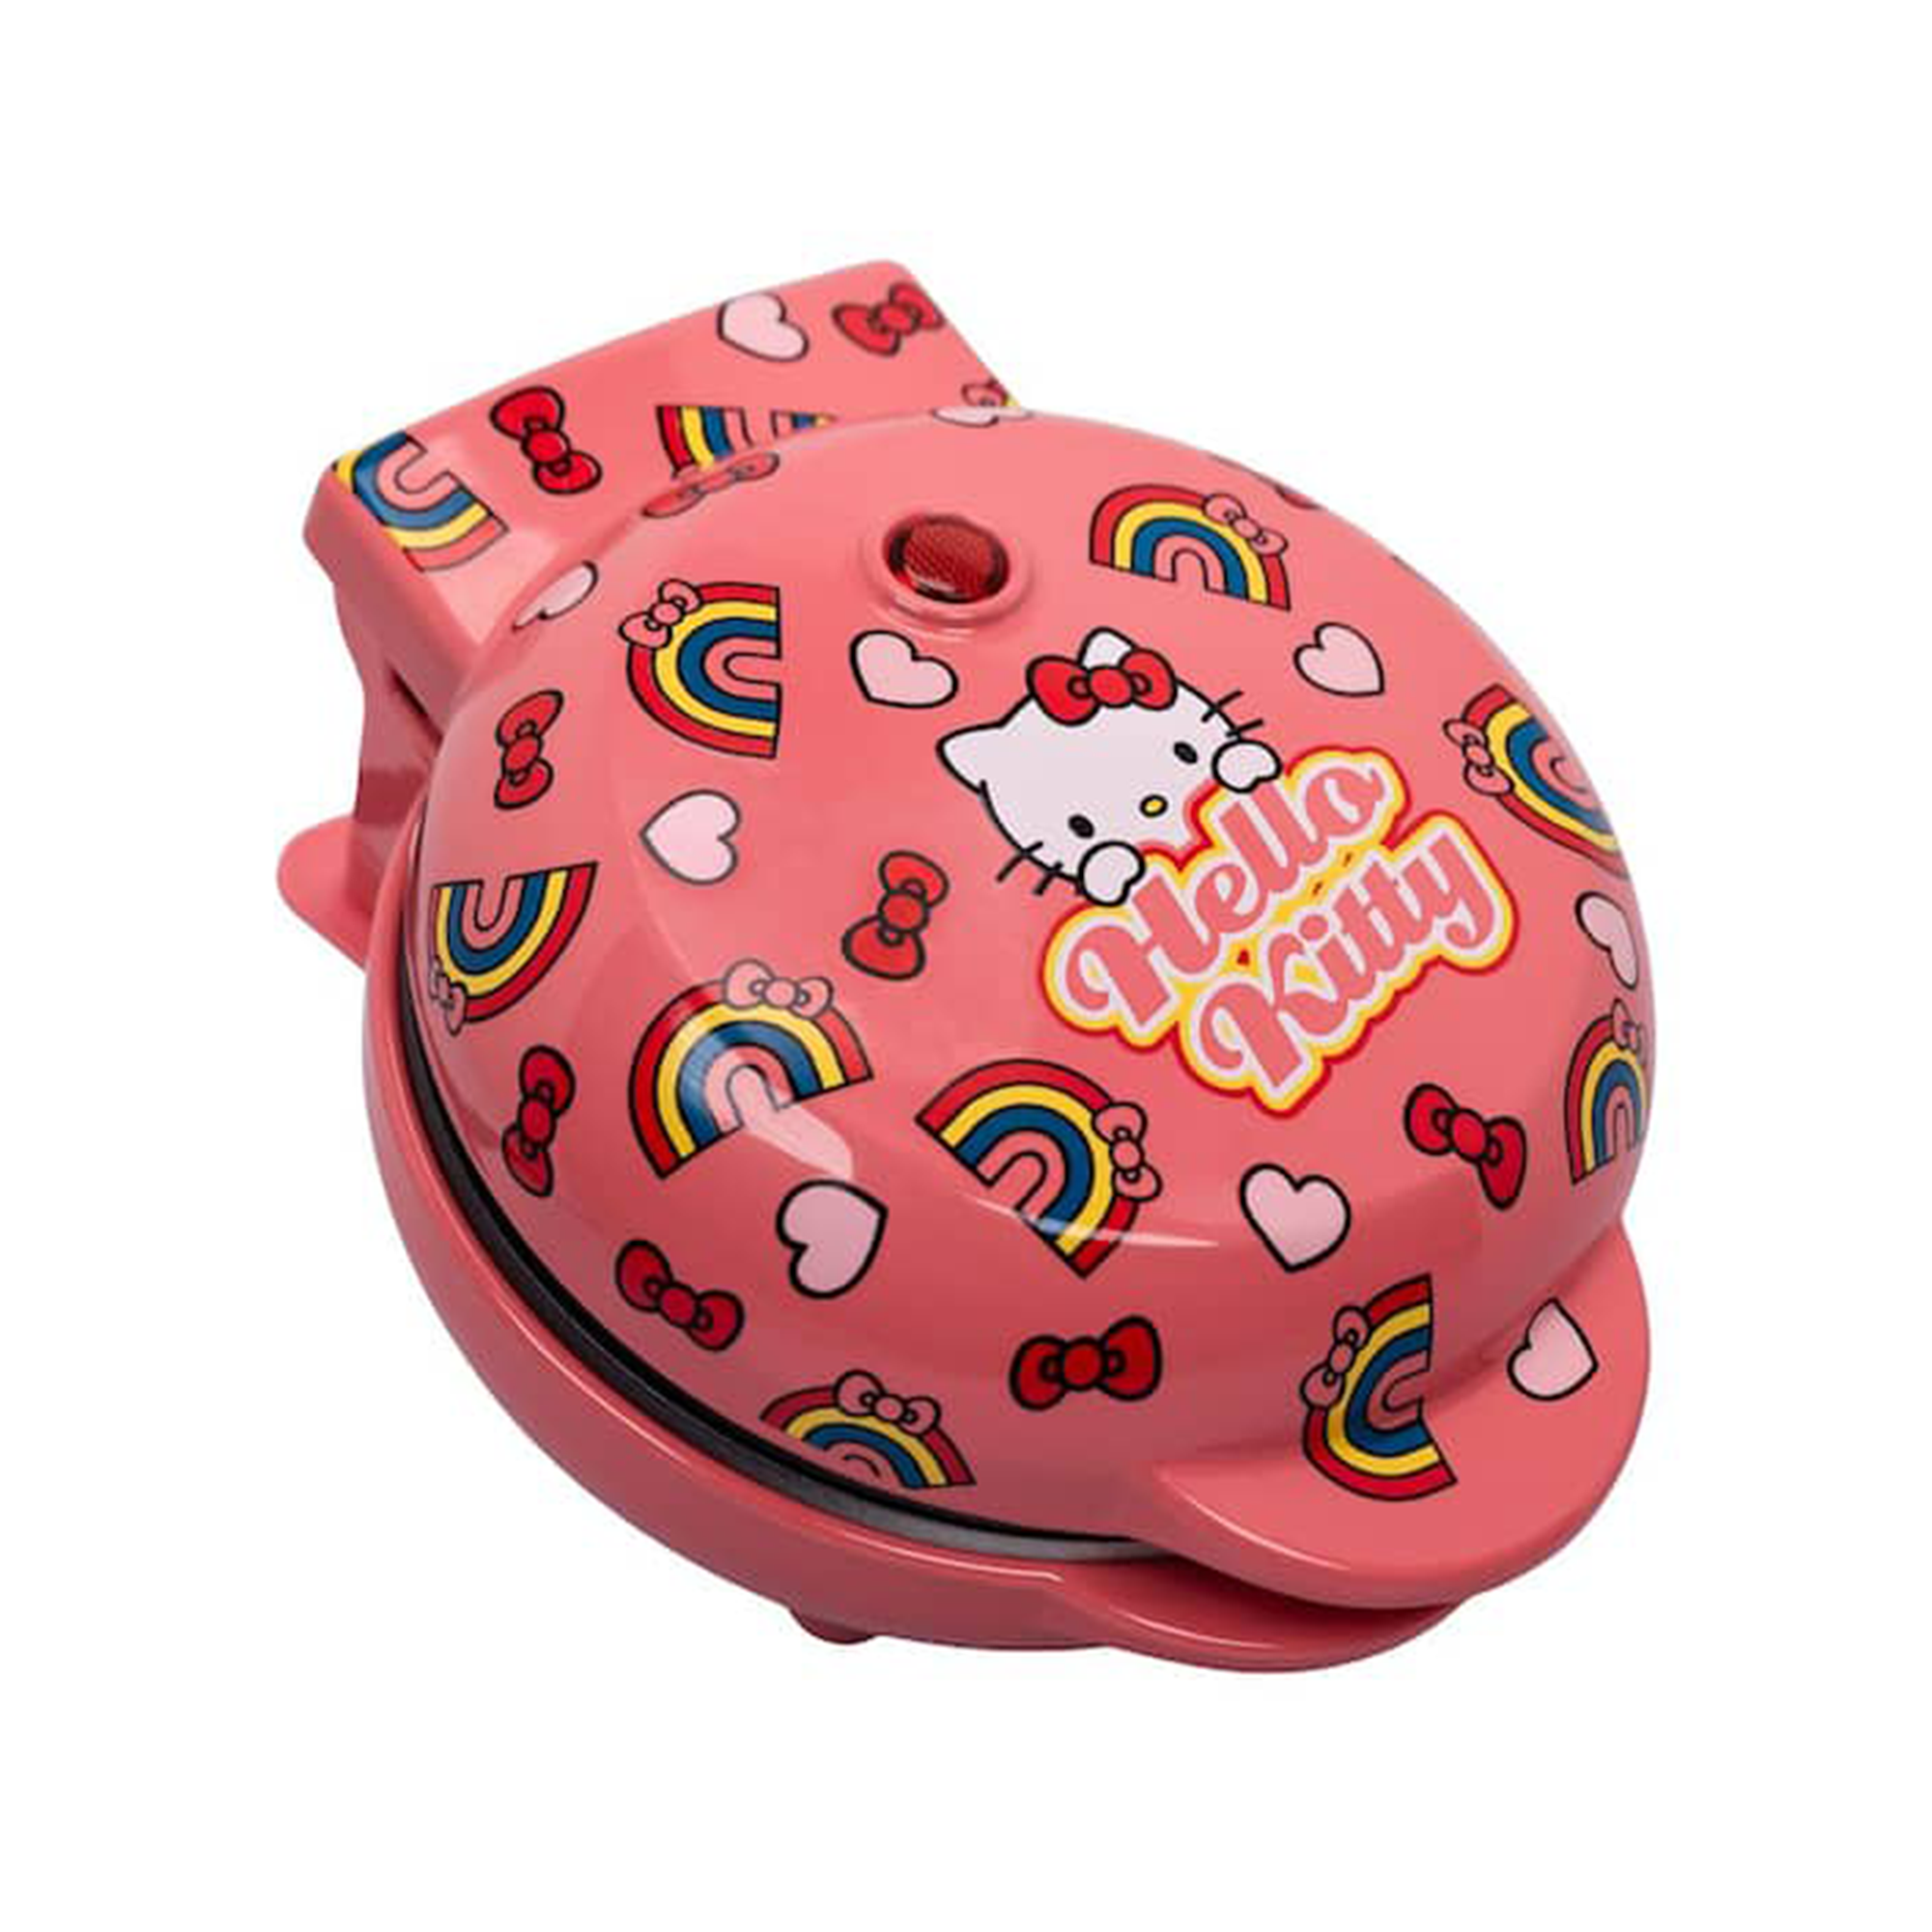 Uncanny Brands 2 Qt. Pink Hello Kitty Slow Cooker SC2-KIT-HK1